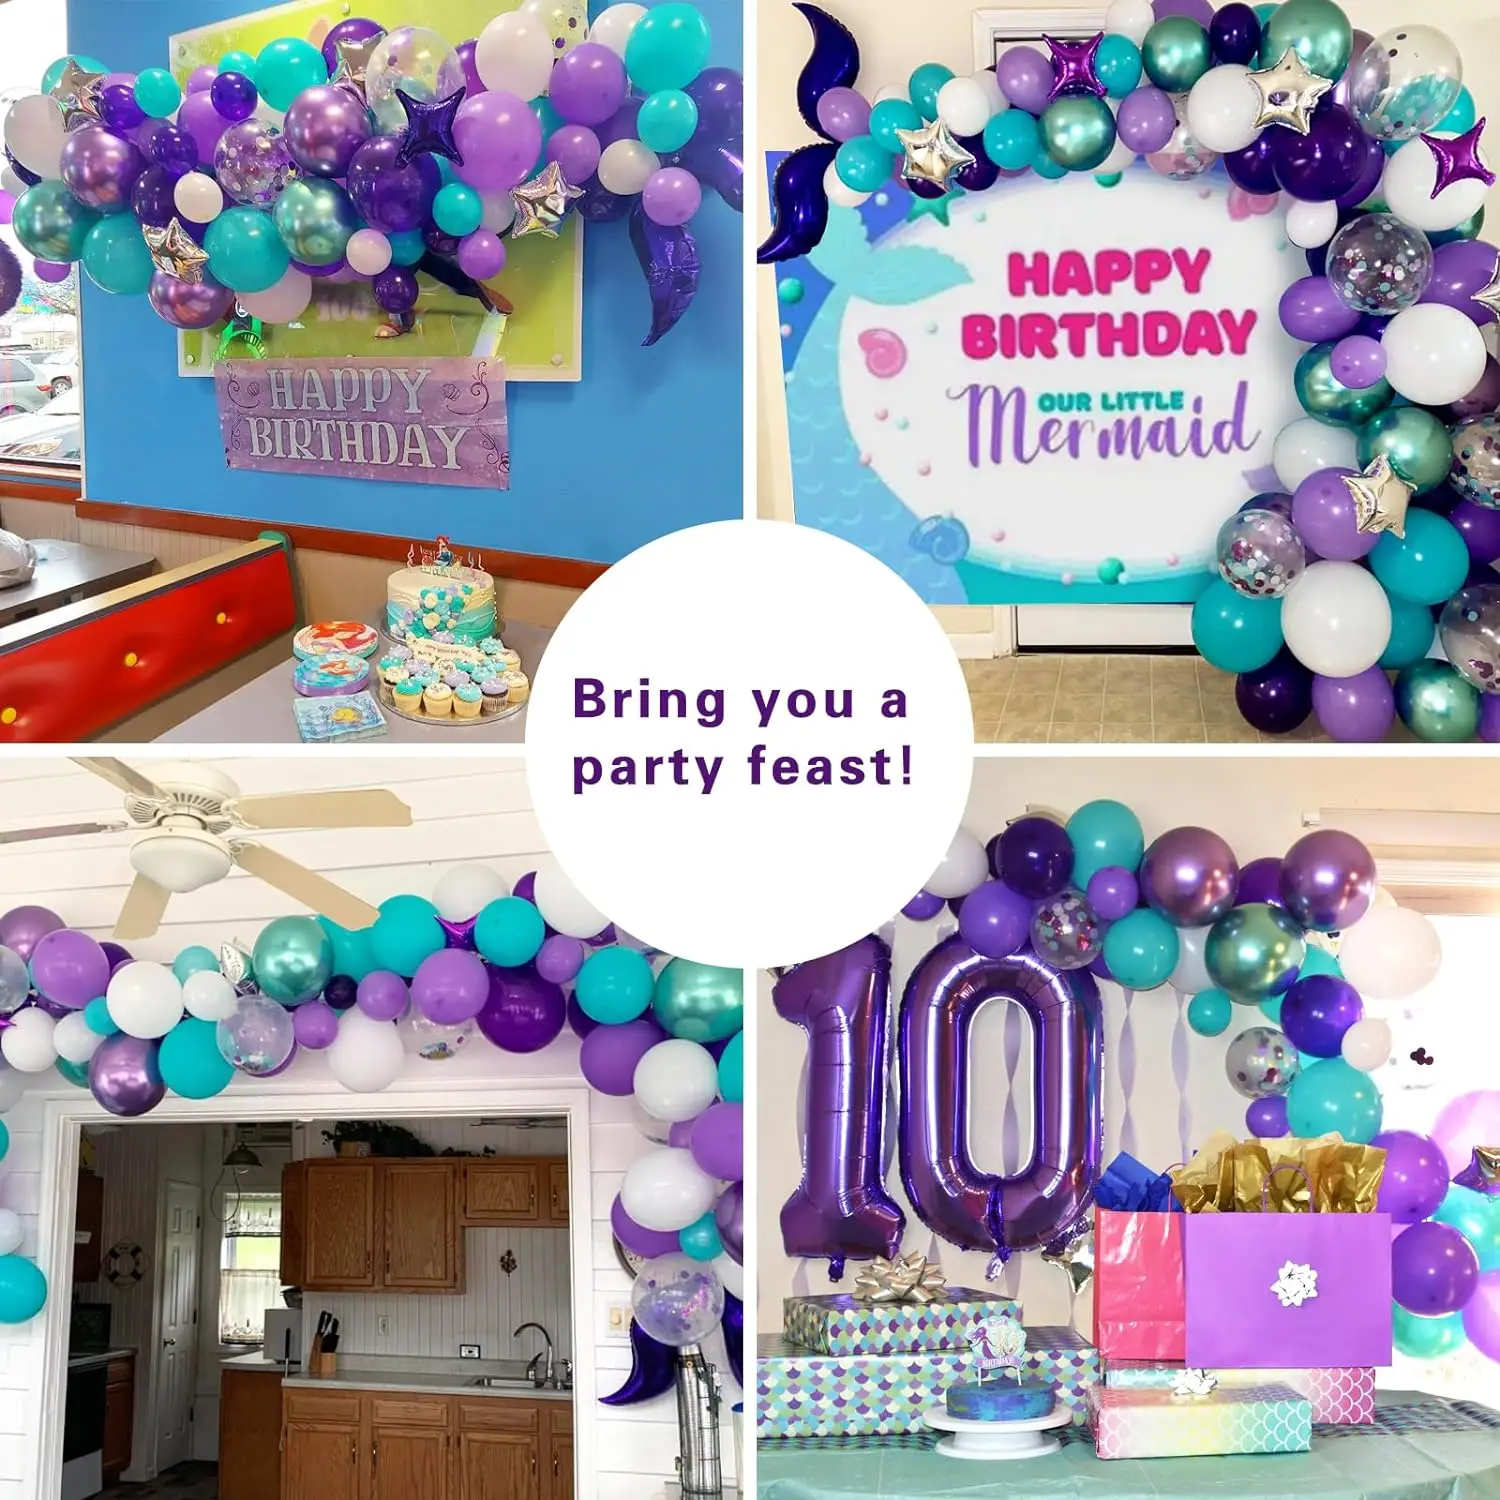 Purple Balloons Mermaid Tail Balloon Garland Kit Wedding Birthday Party Decoration Supplies